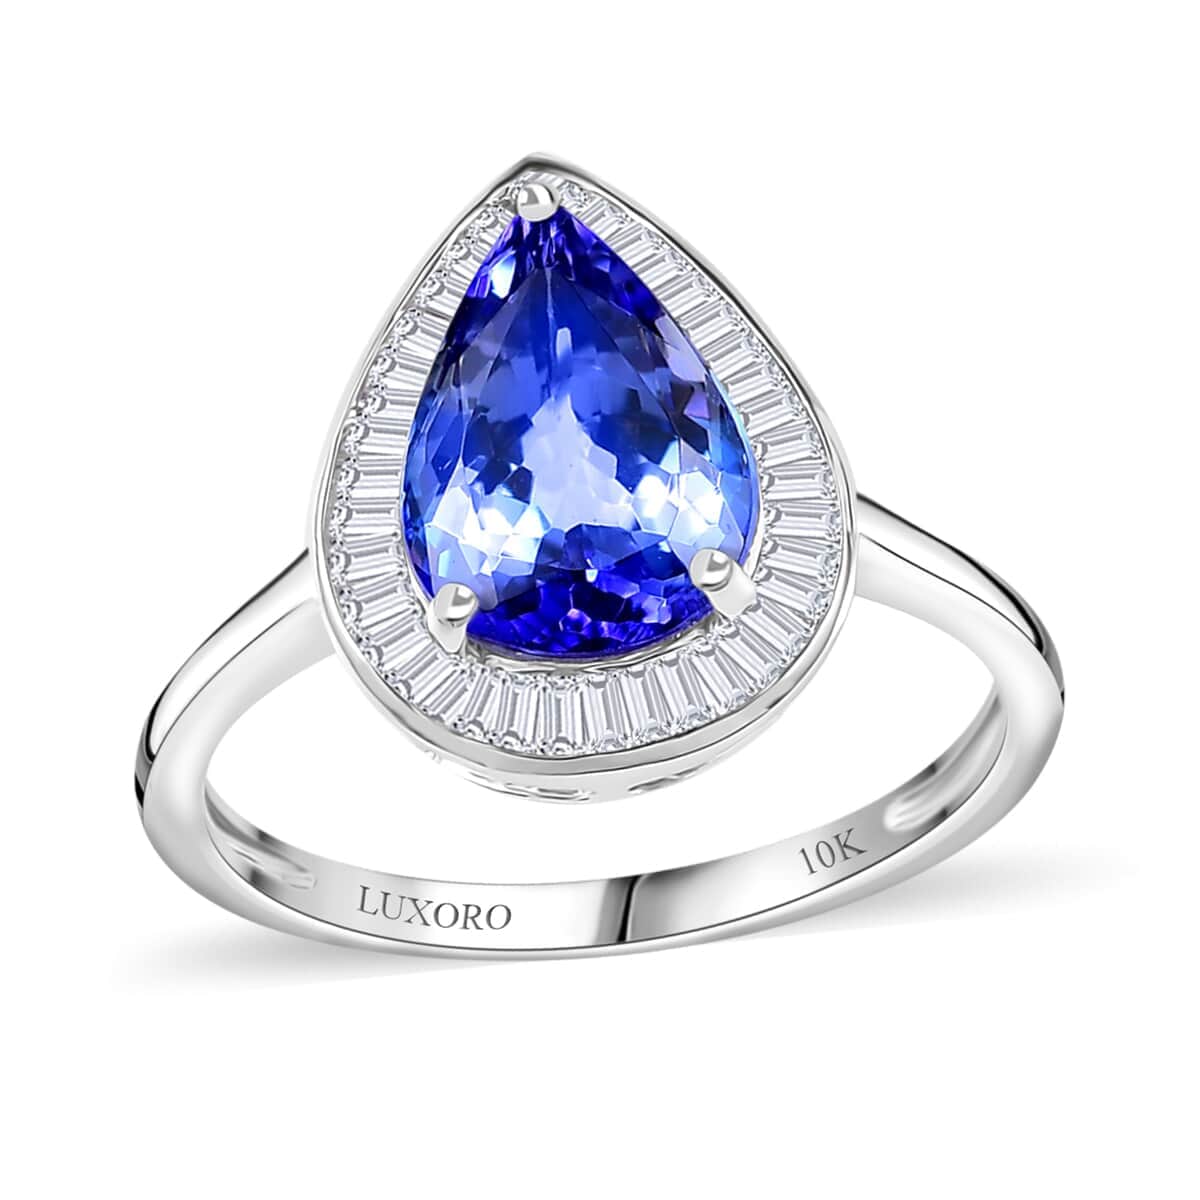 Luxoro 10K White Gold Premium Tanzanite and Diamond Ring (Size 10.0) 2.25 ctw image number 0